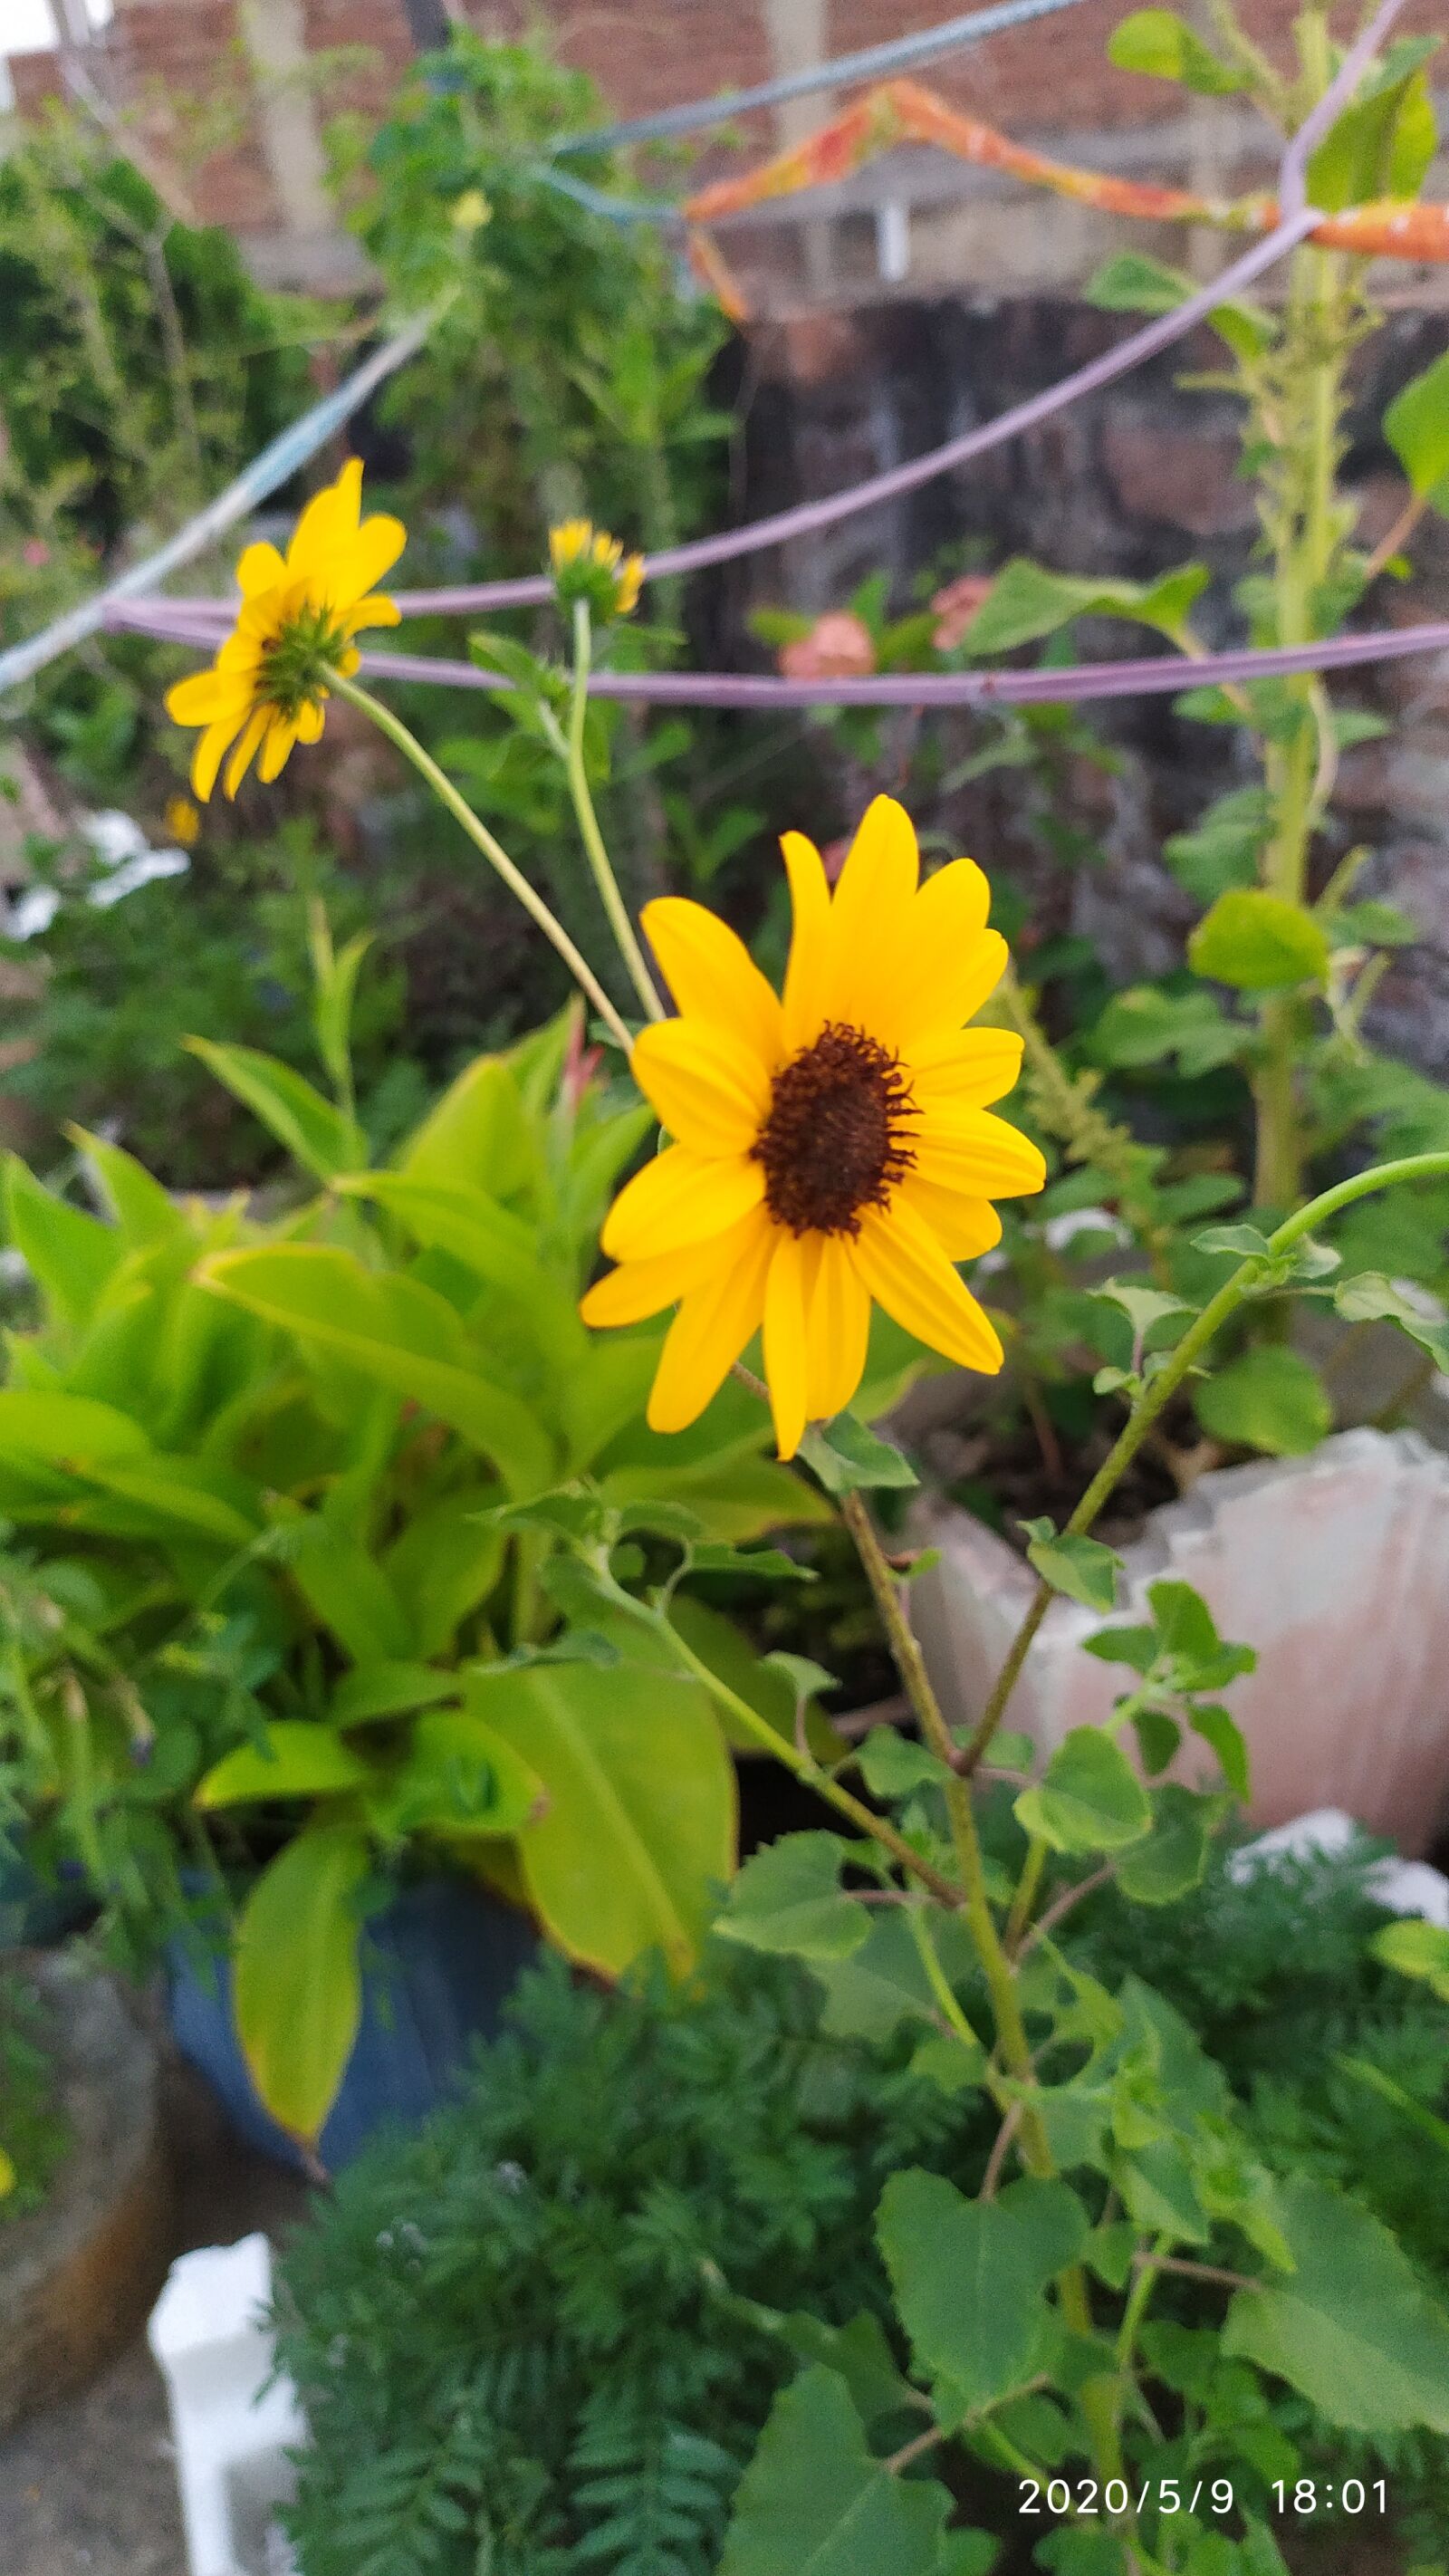 Xiaomi Redmi Note 7S sample photo. Flower, sunflower, nature photography